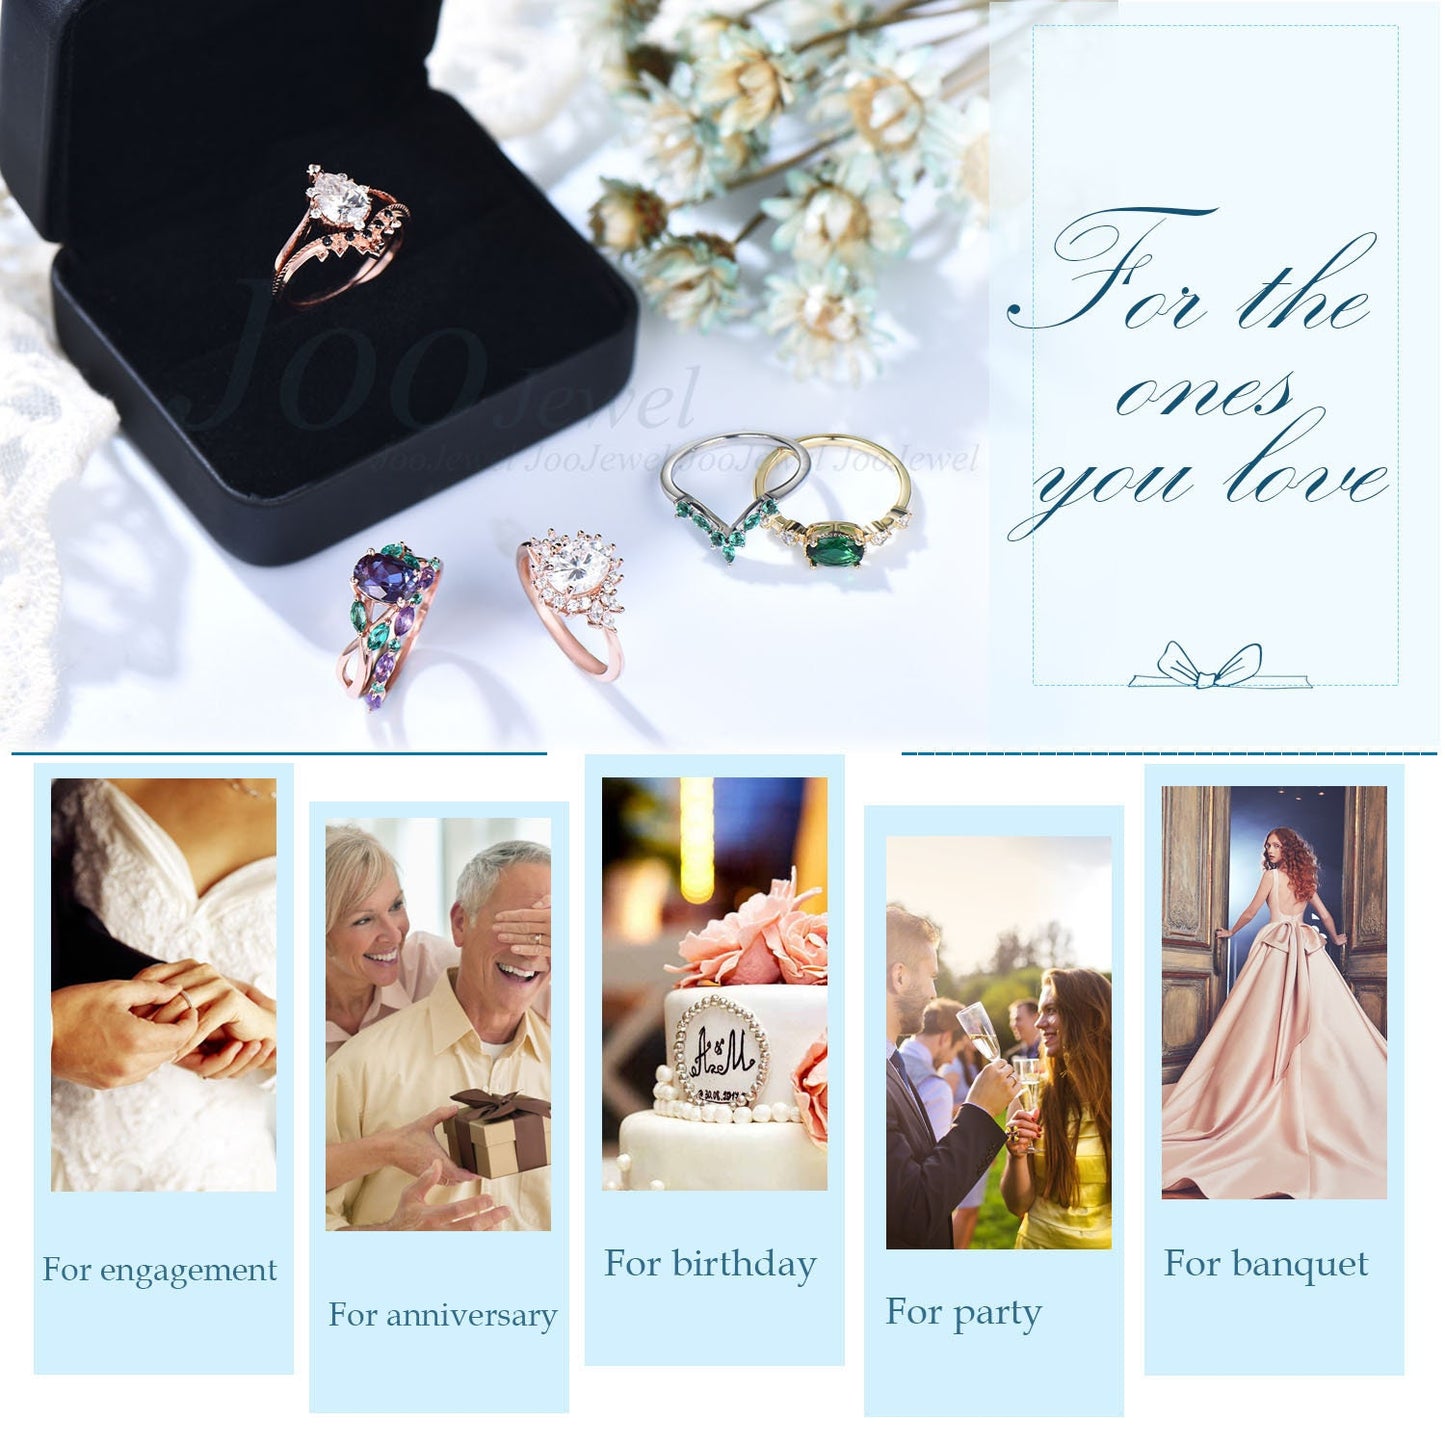 Pink Crystal Ring 1ct Round Natural Rose Quartz Engagement Ring Valentine's Day Gift Promise Ring Wedding Gemstone Ring Dainty Healing Ring